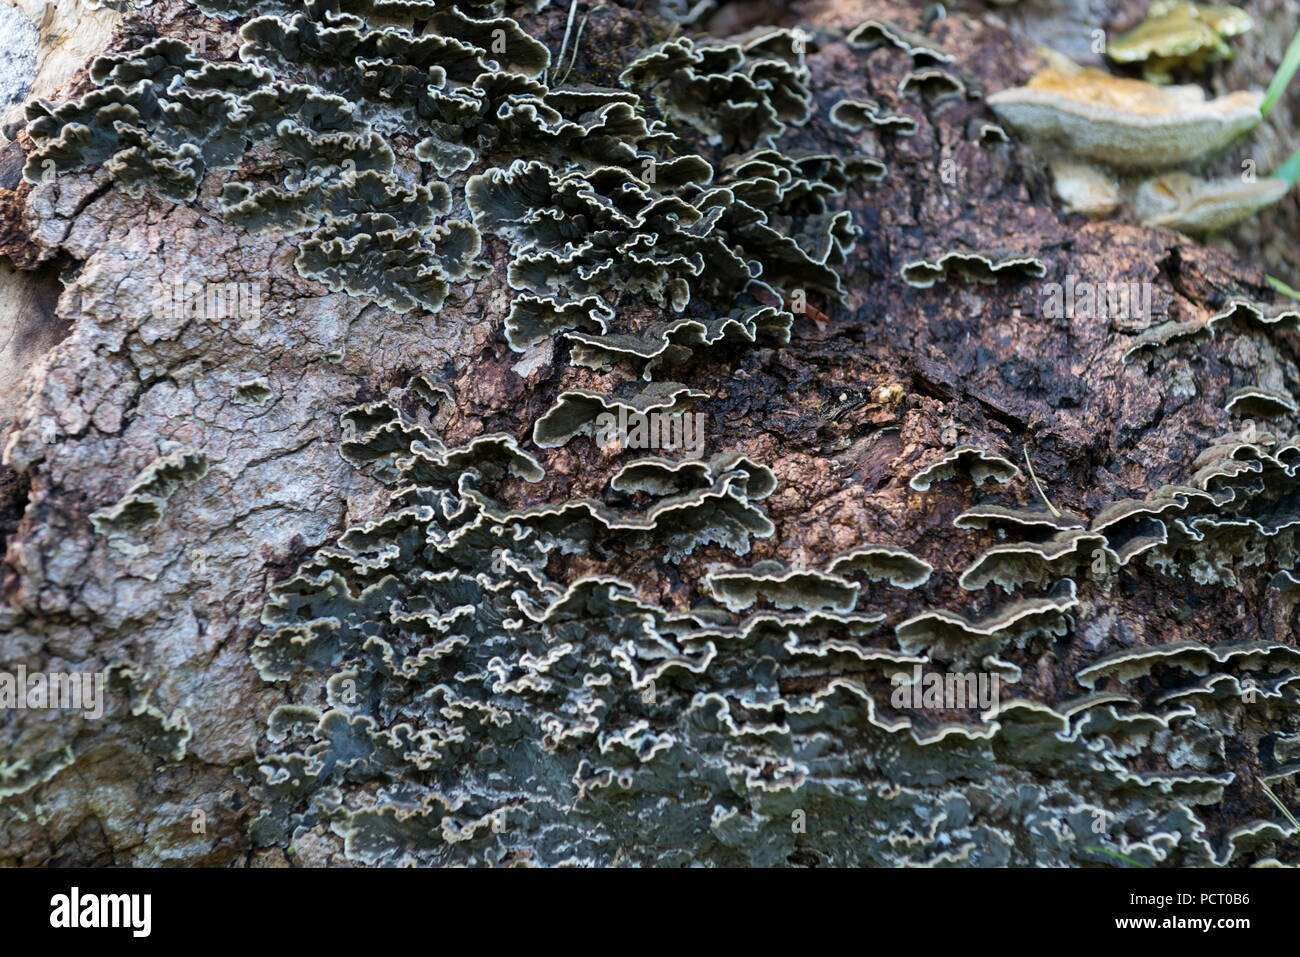 Austria, Alpbach valley, mushroom on a tree stump. Stock Photo